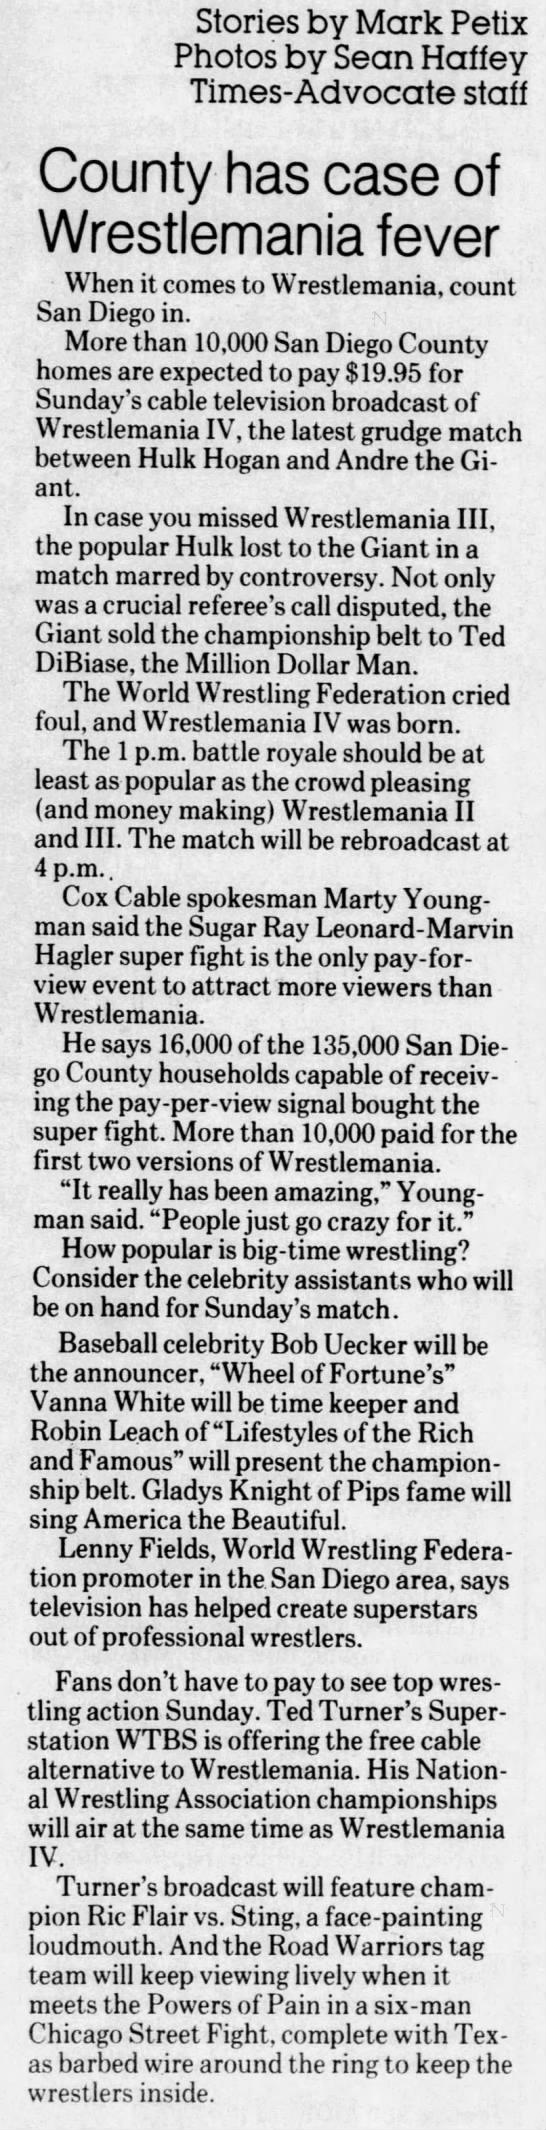 [San Diego] County has case of WrestleMania fever (Escondido Times-Advocate 3/24/1988) - 